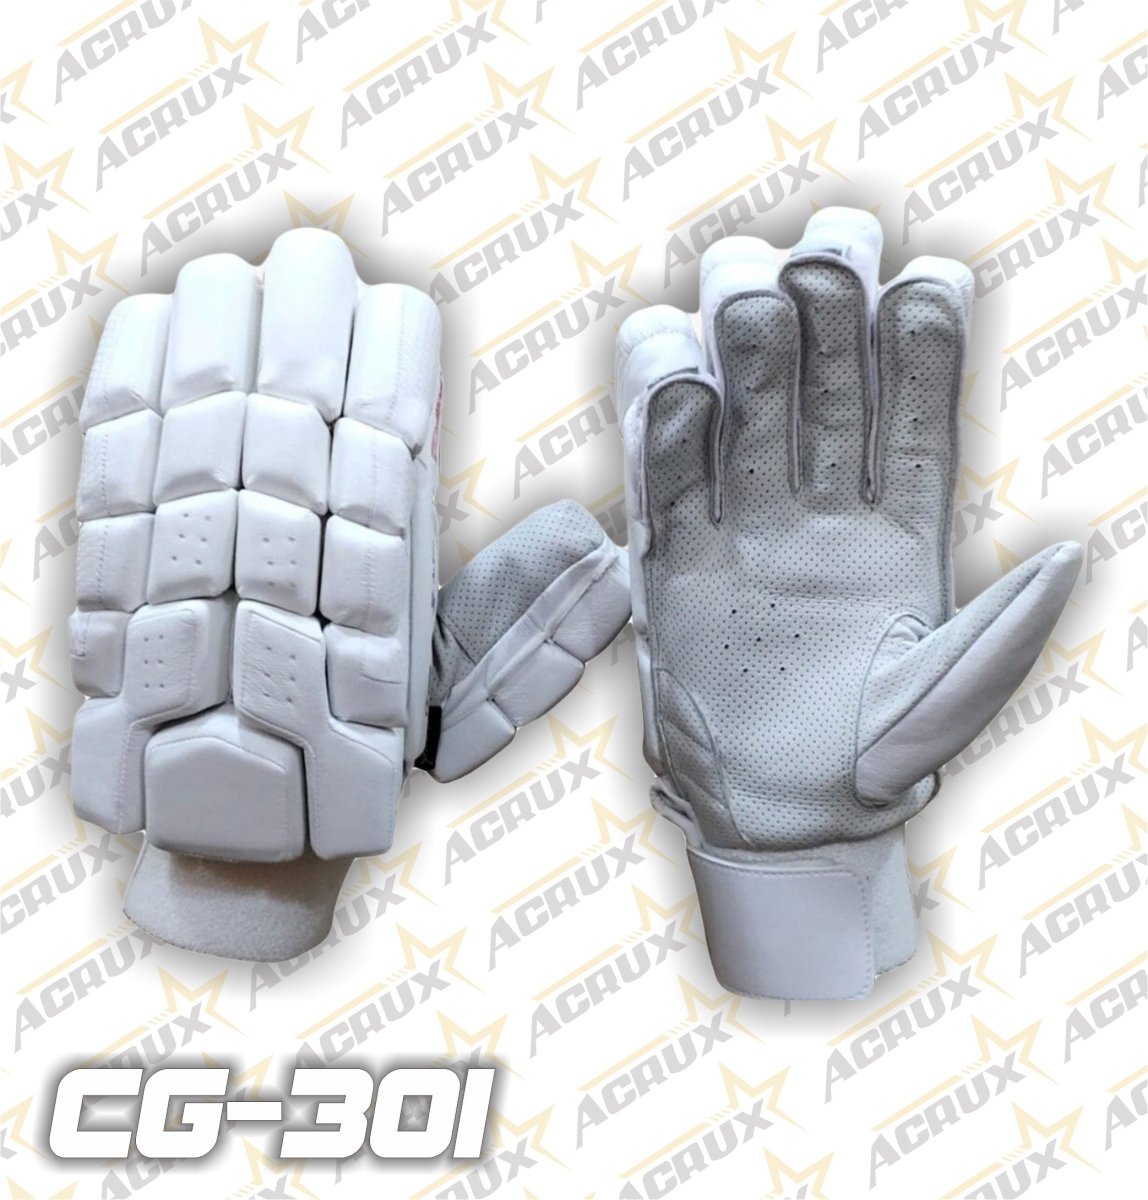 Cricket Batting Gloves CG-301 +Clean Skin Batting Pads Combo - Acrux Sports